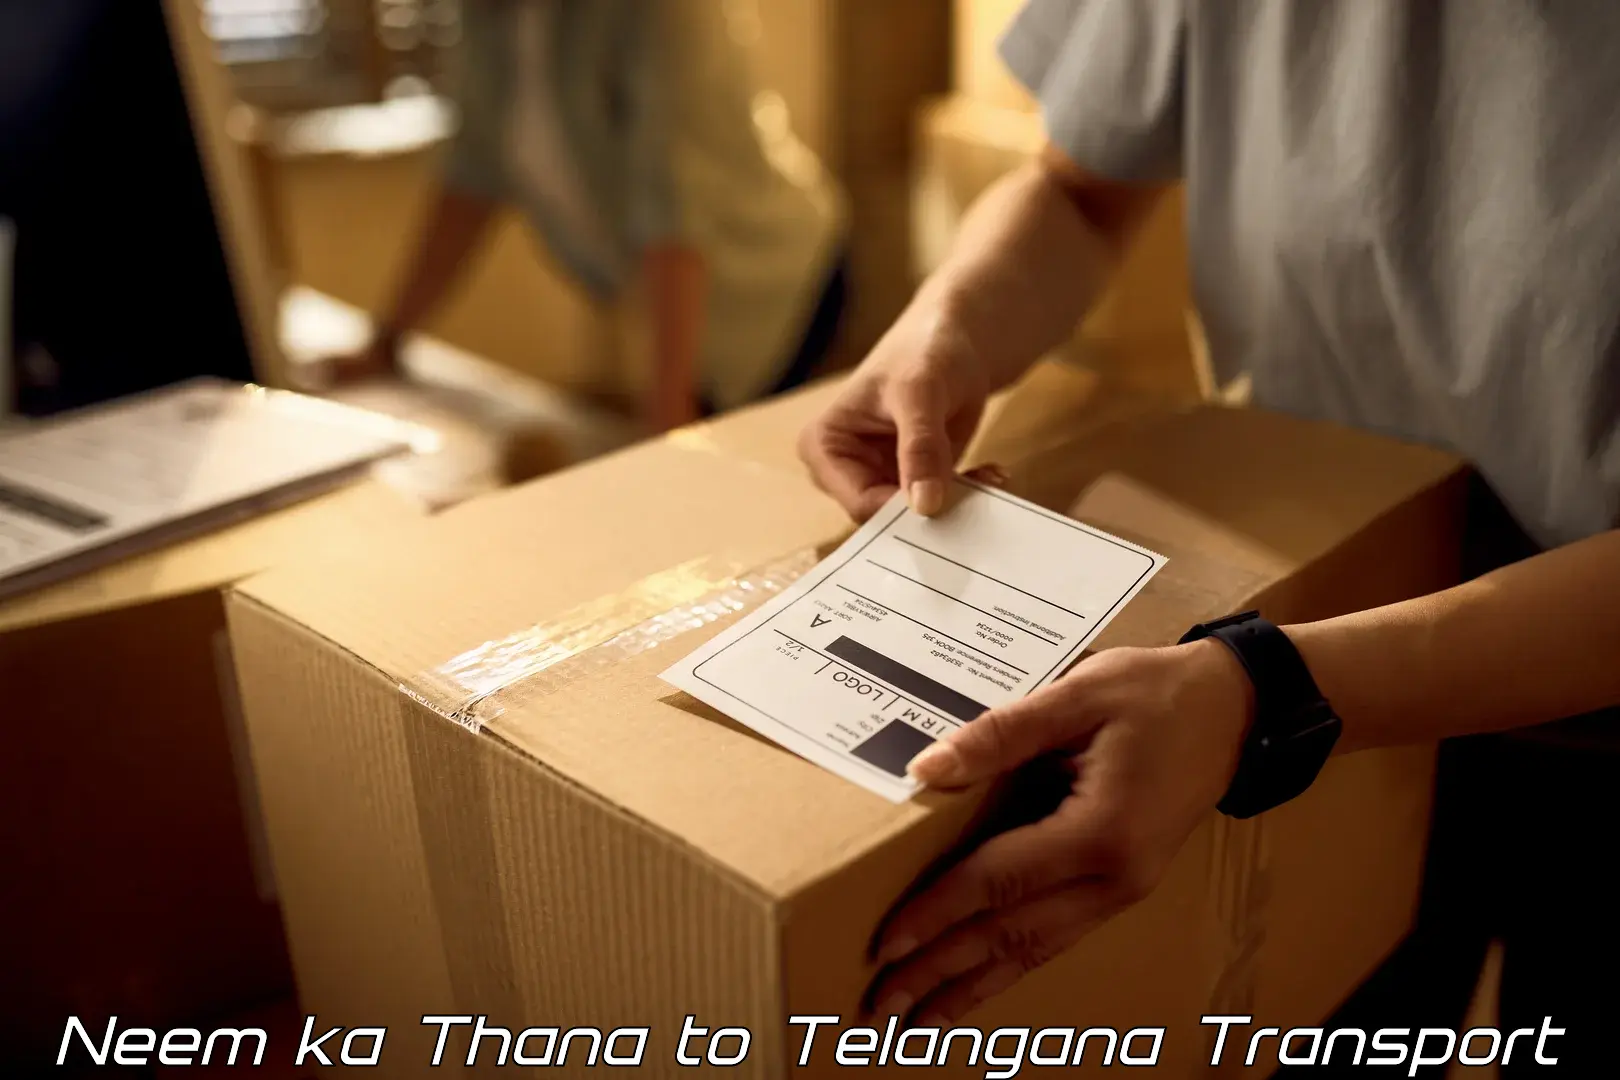 Delivery service Neem ka Thana to Sultanabad